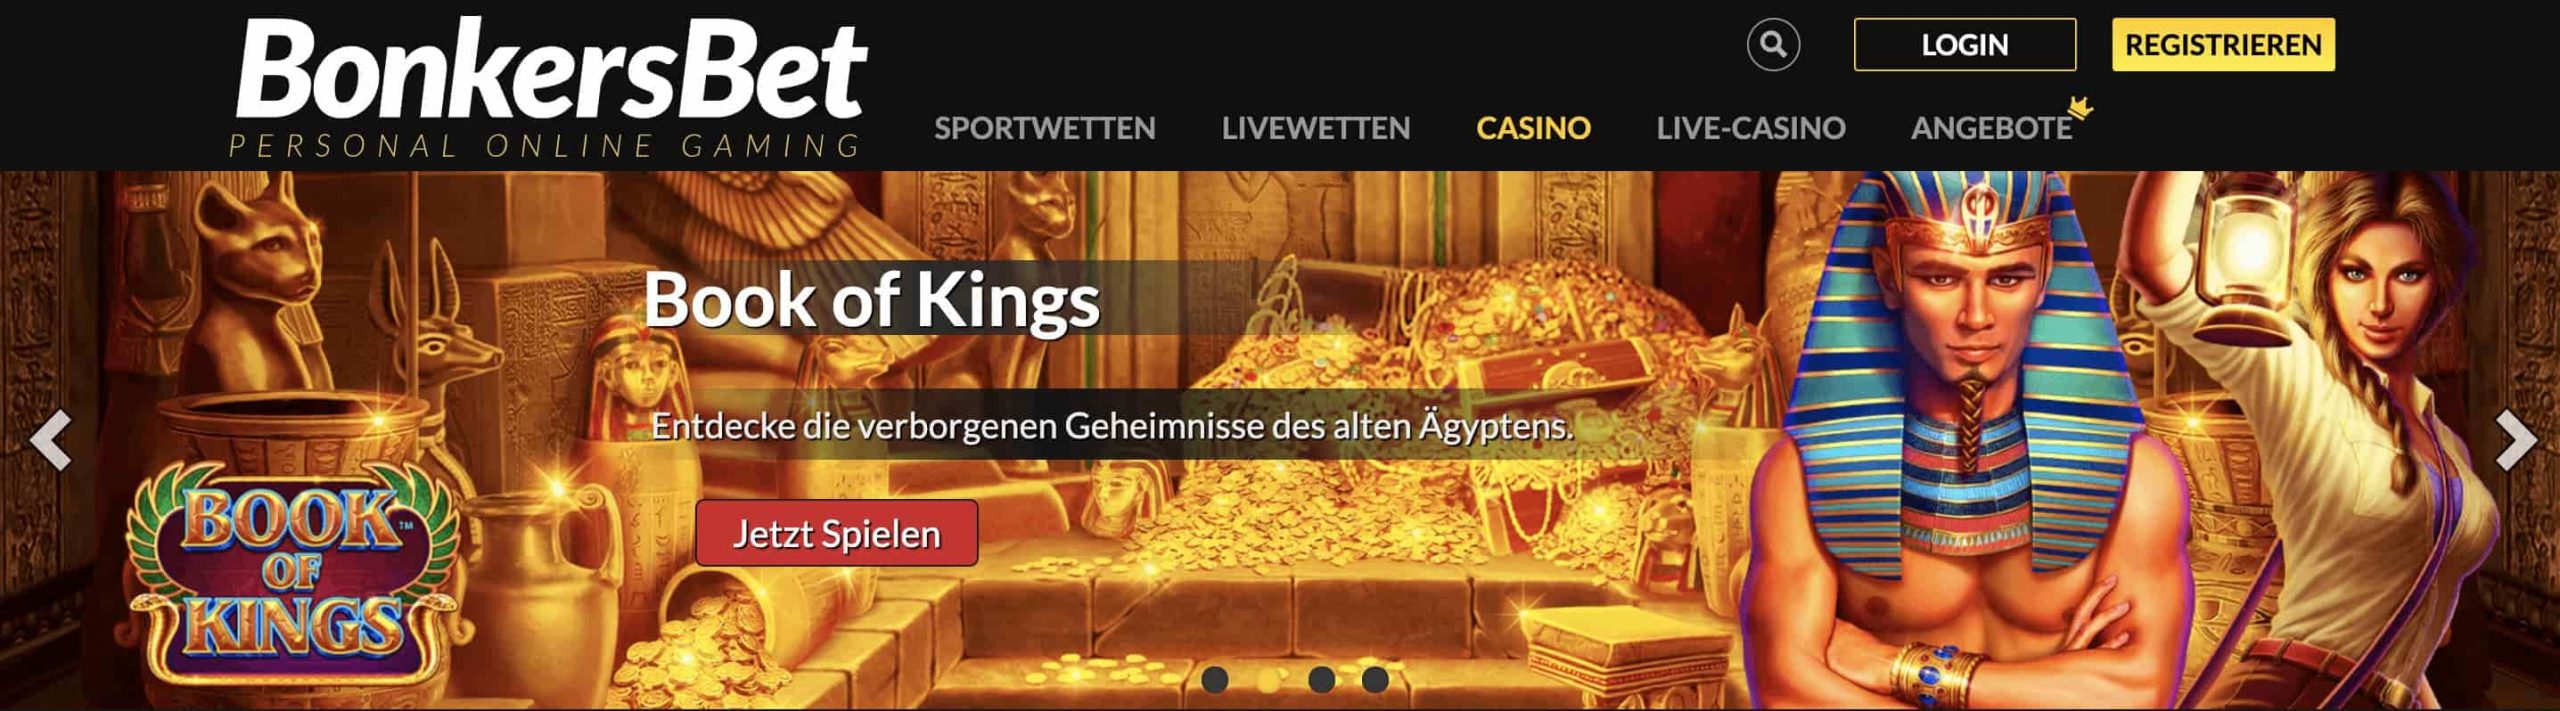 BonkersBet Casino Book og Kings Spiel